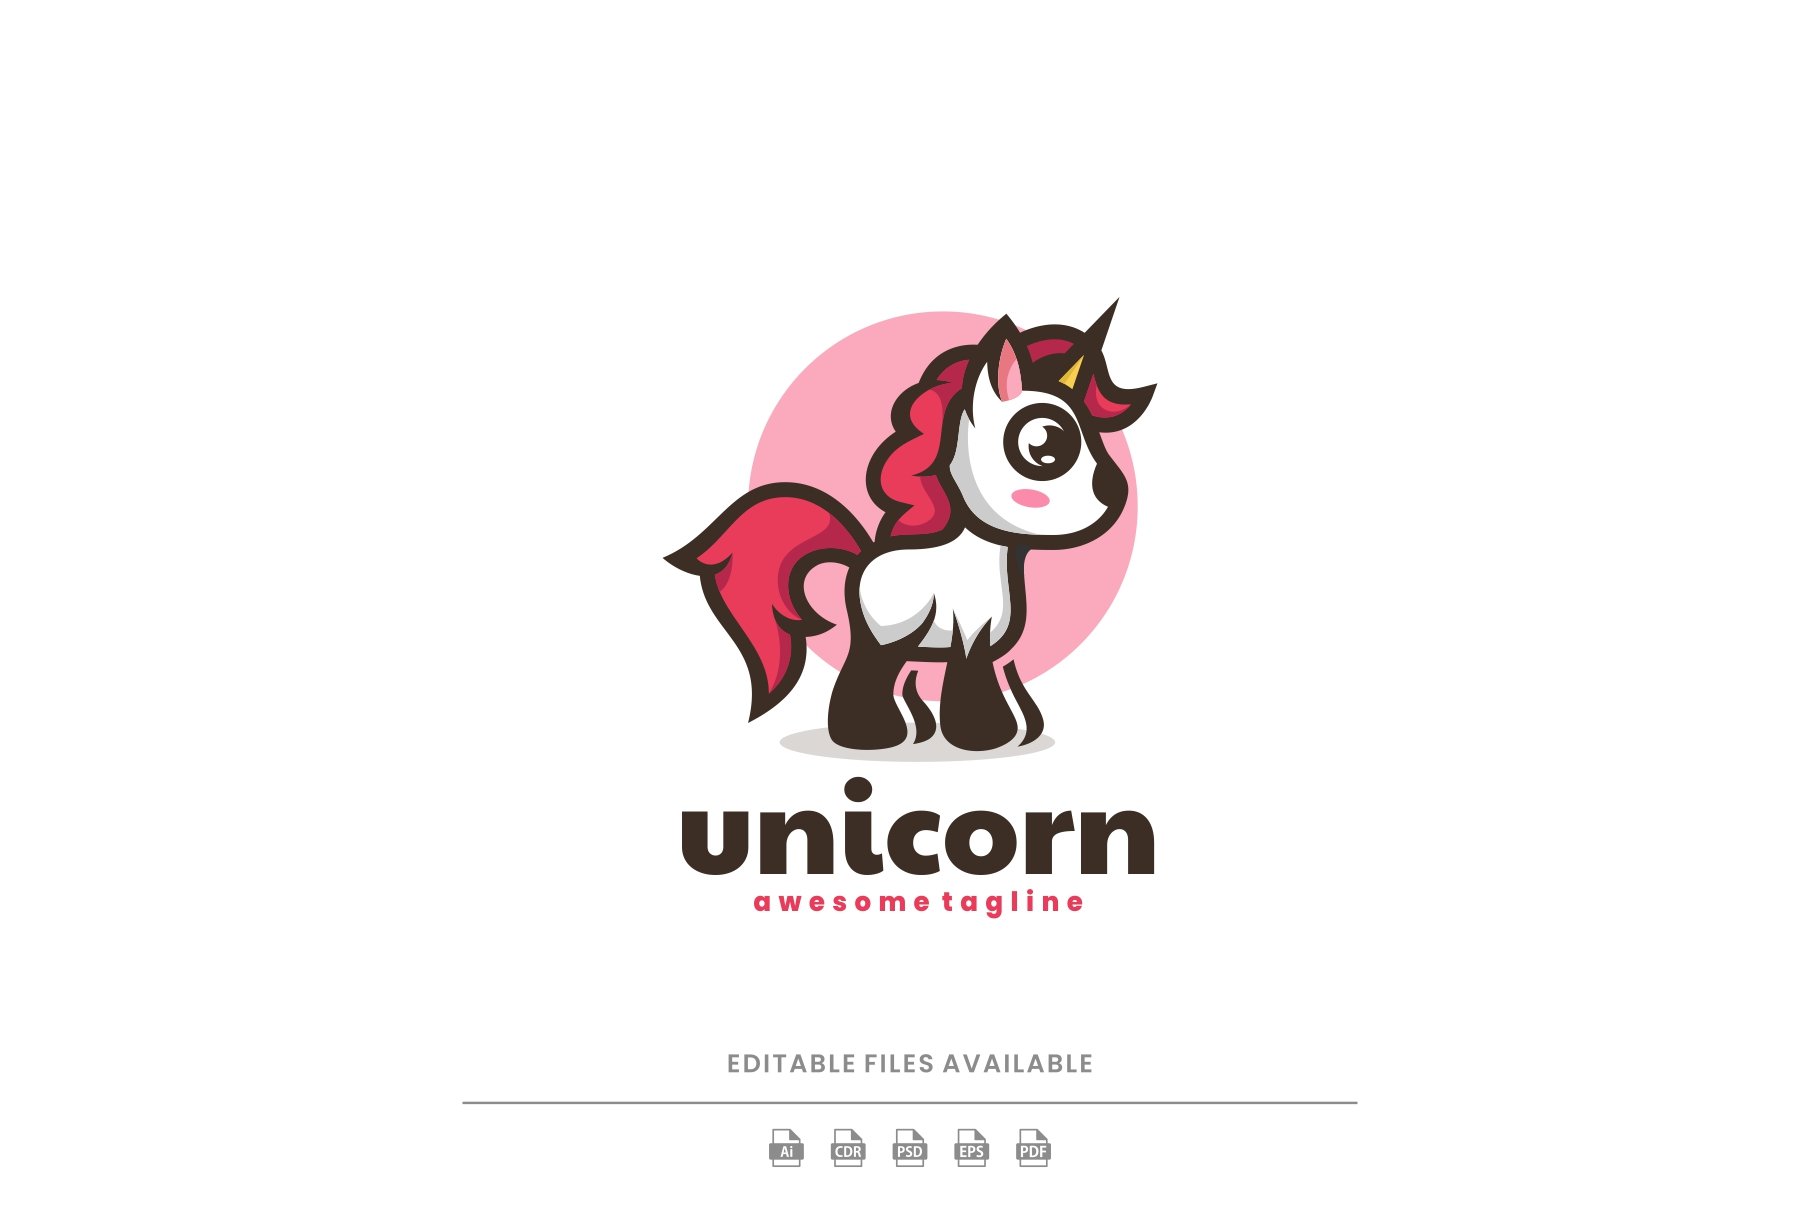 Unicorn Mascot Logo cover image.